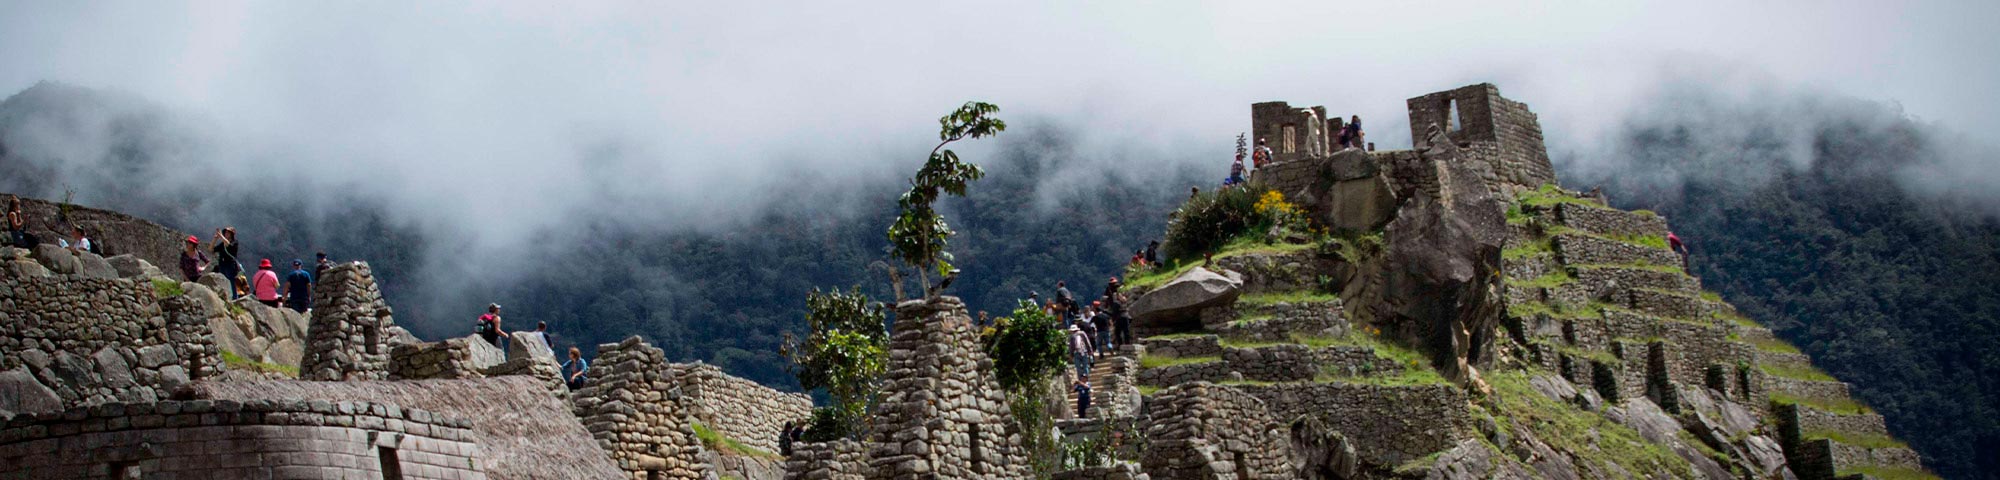 Inician filmaciones de la película ‘Transformers’ en Machu Picchu